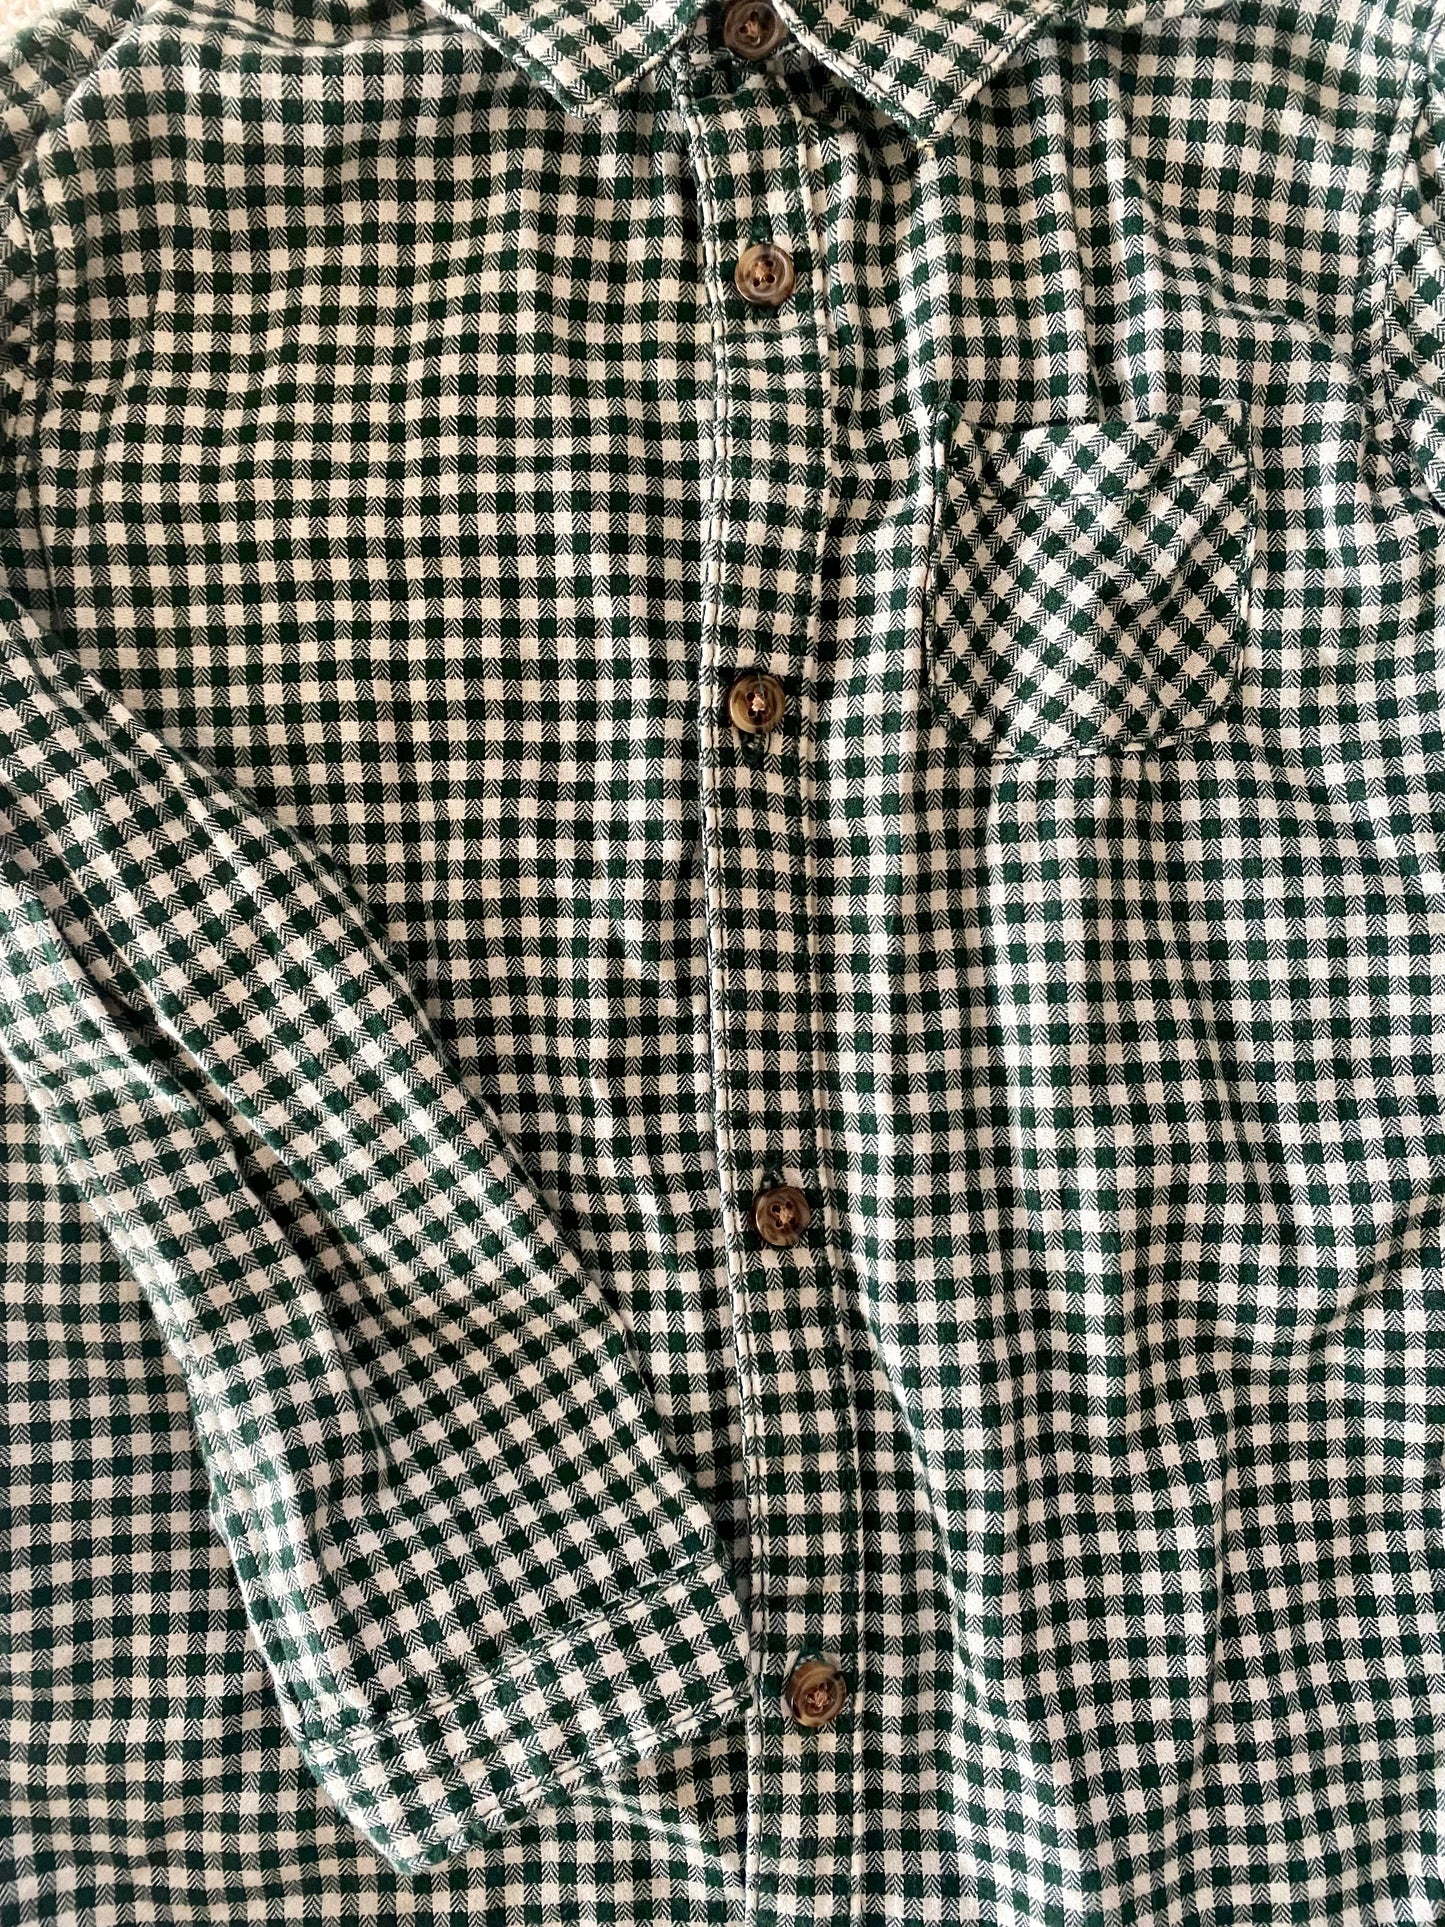 Grönvit rutig mjuk skjorta i 98